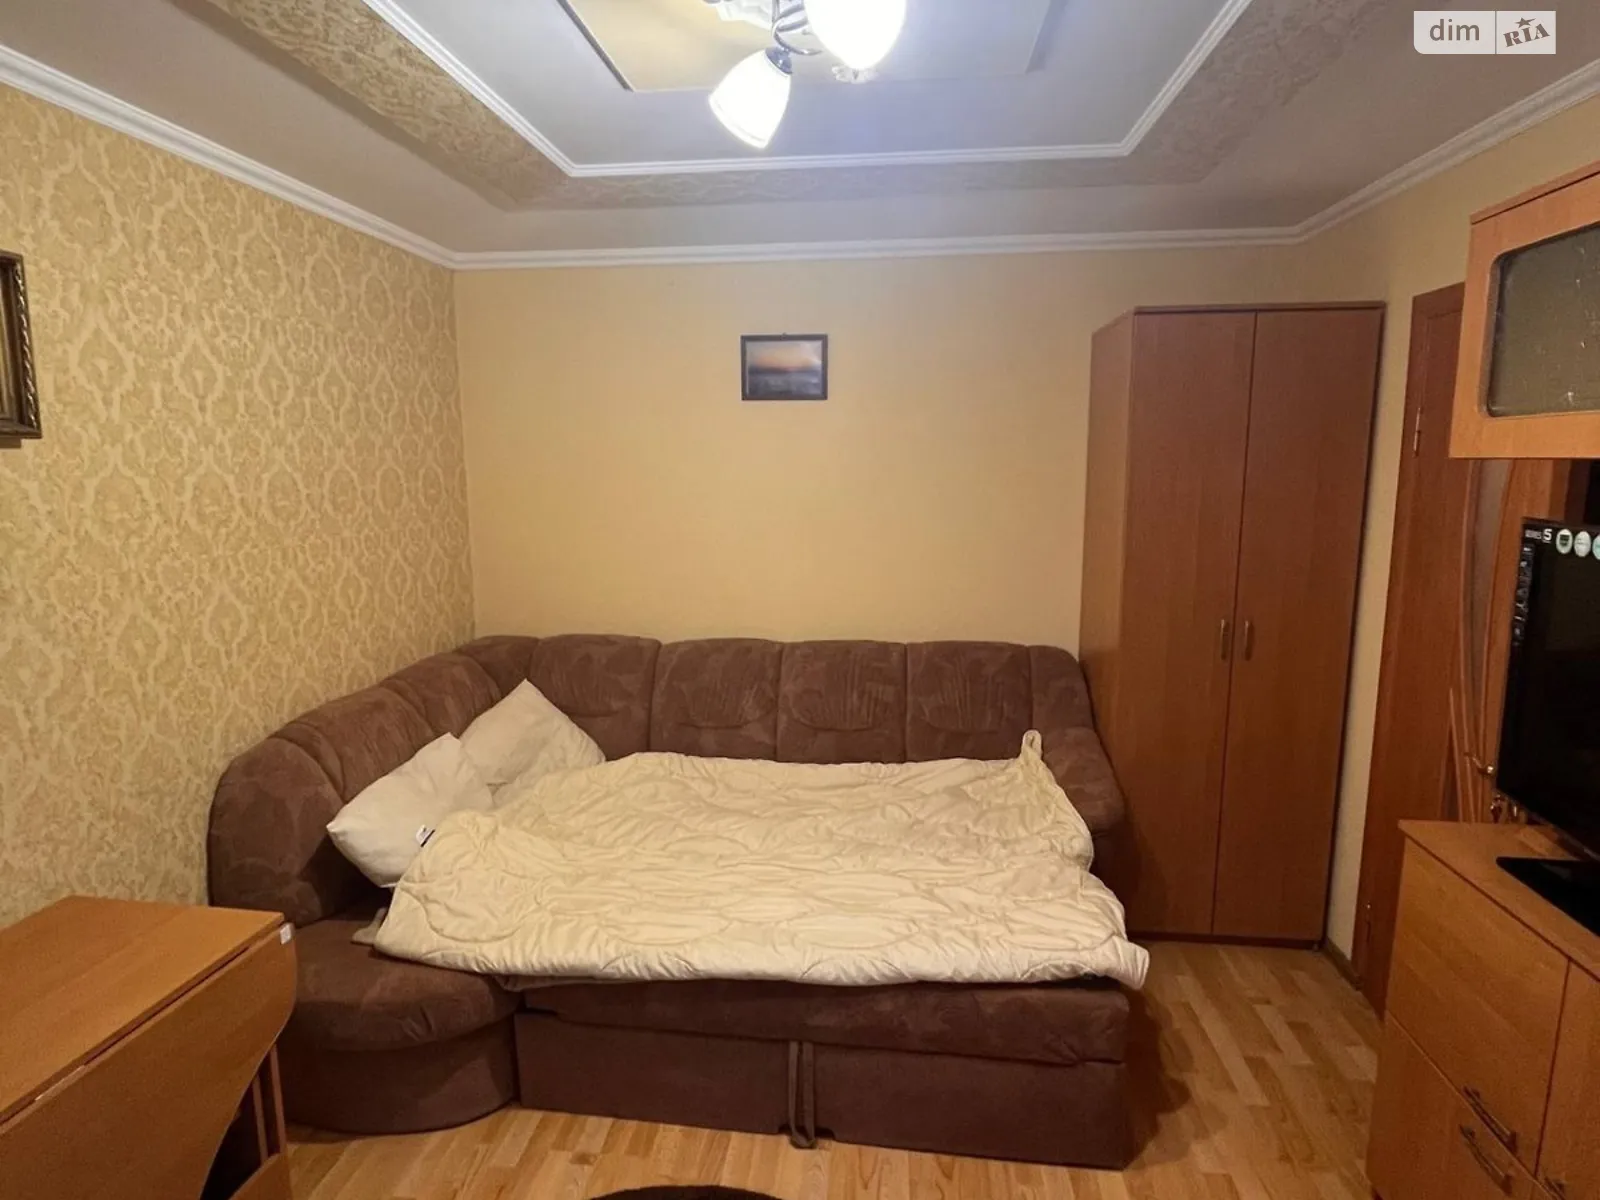 Сдается в аренду 1-комнатная квартира 35 кв. м в Ивано-Франковске - фото 2